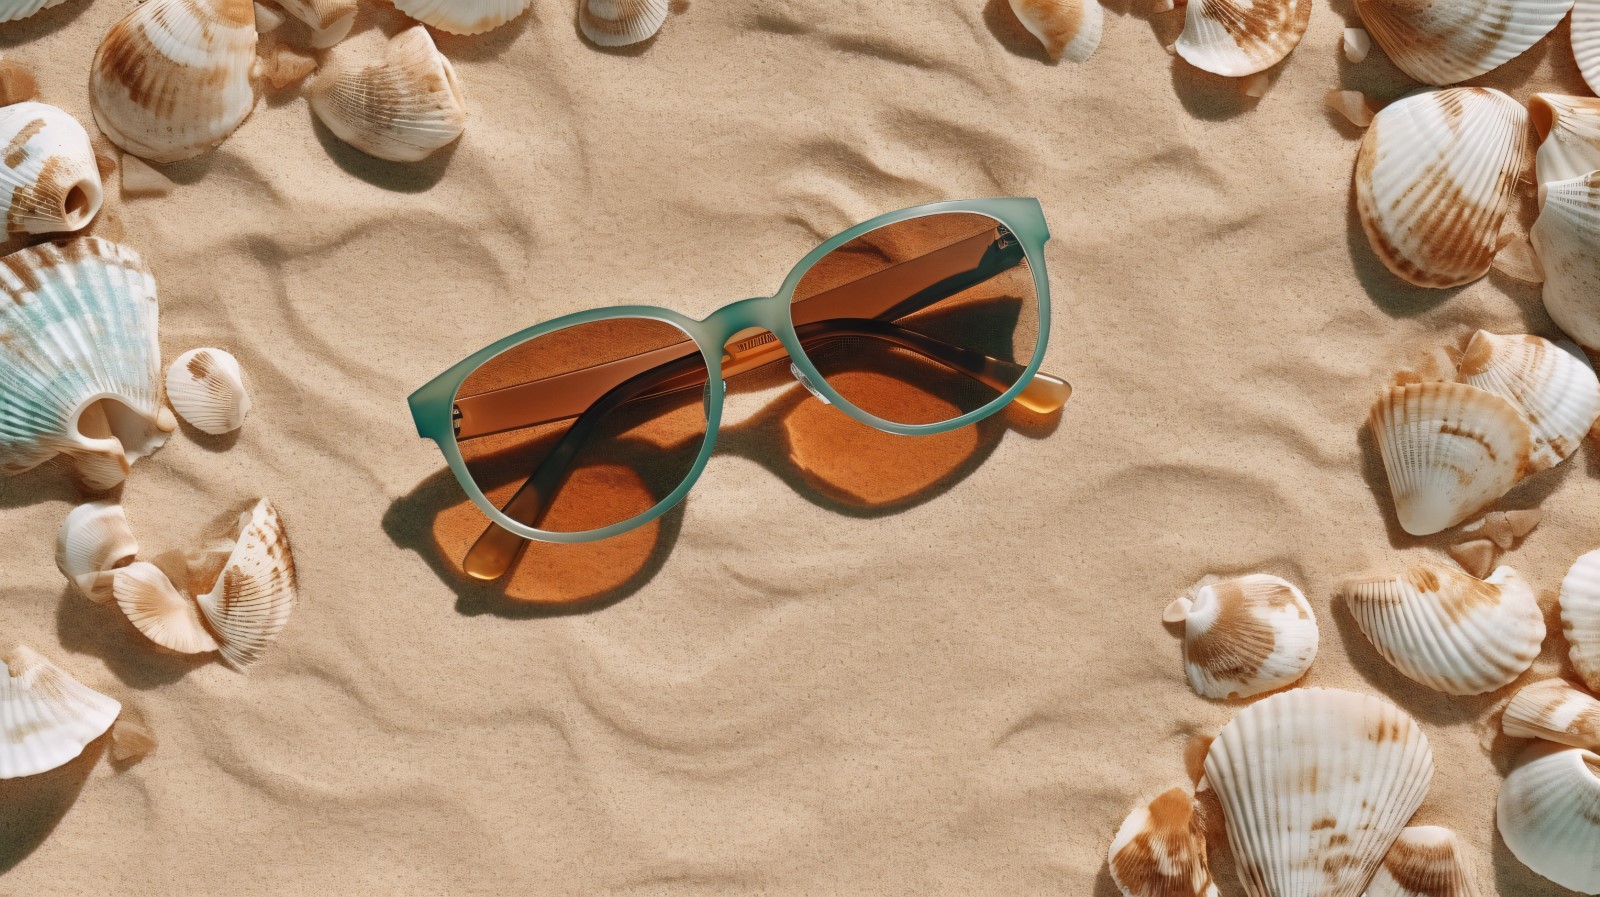 Sunglasses seashells and beach accessories on sandy beach 191